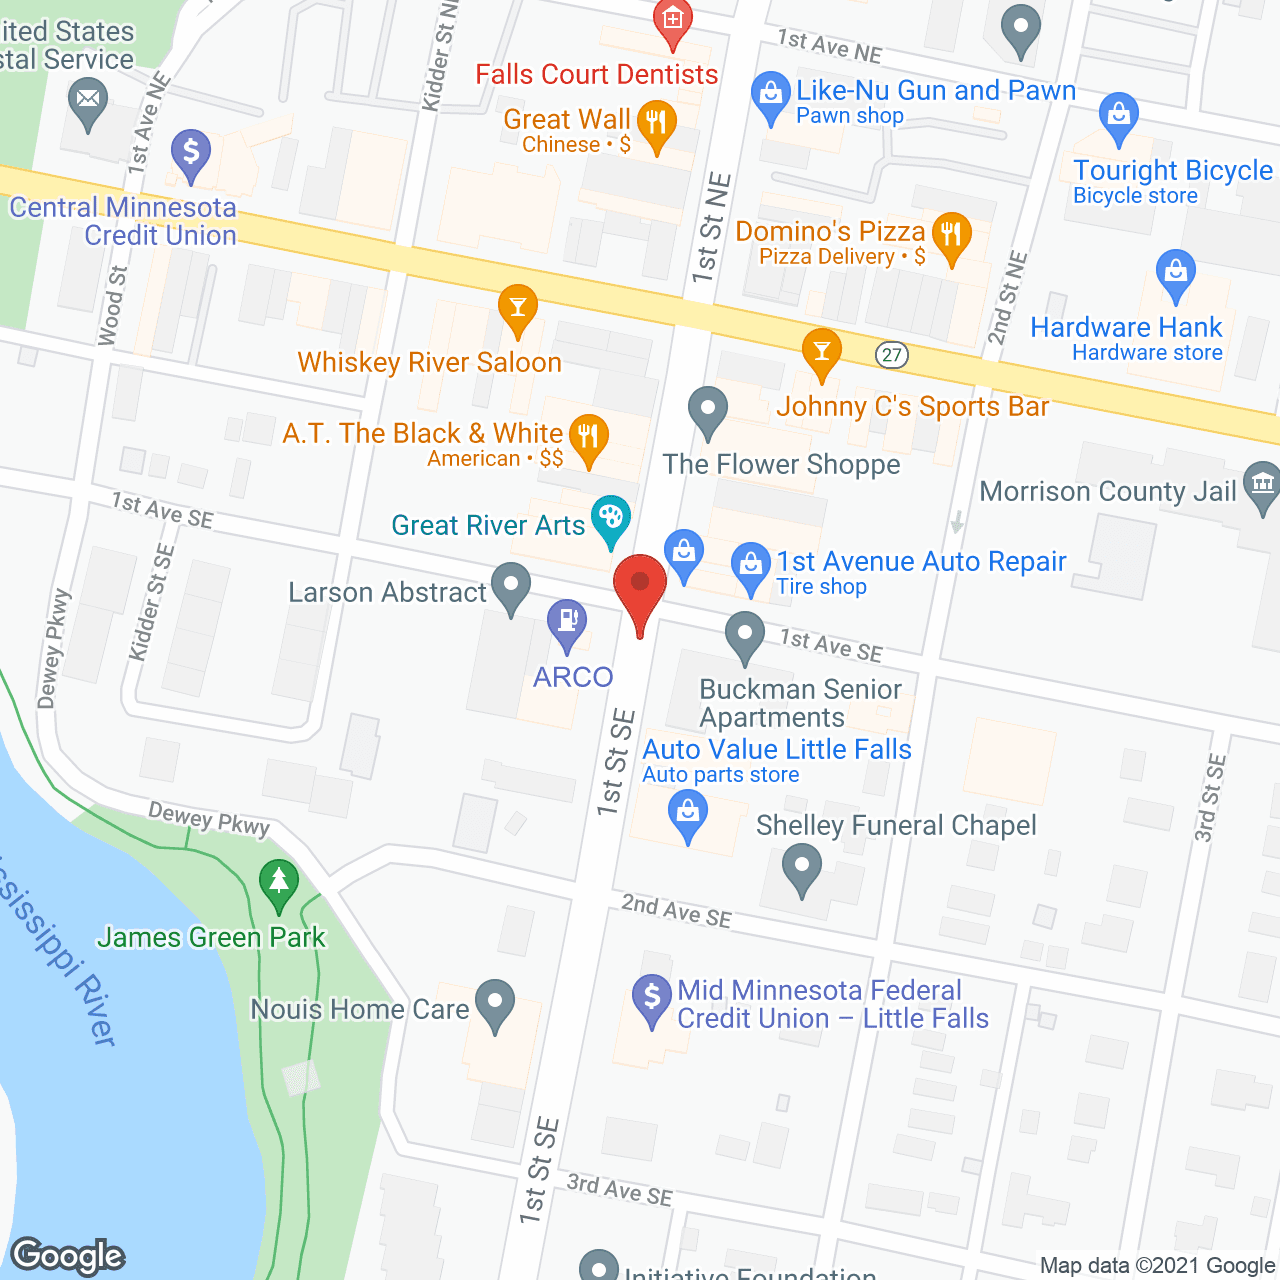 Buckman Apartments in google map